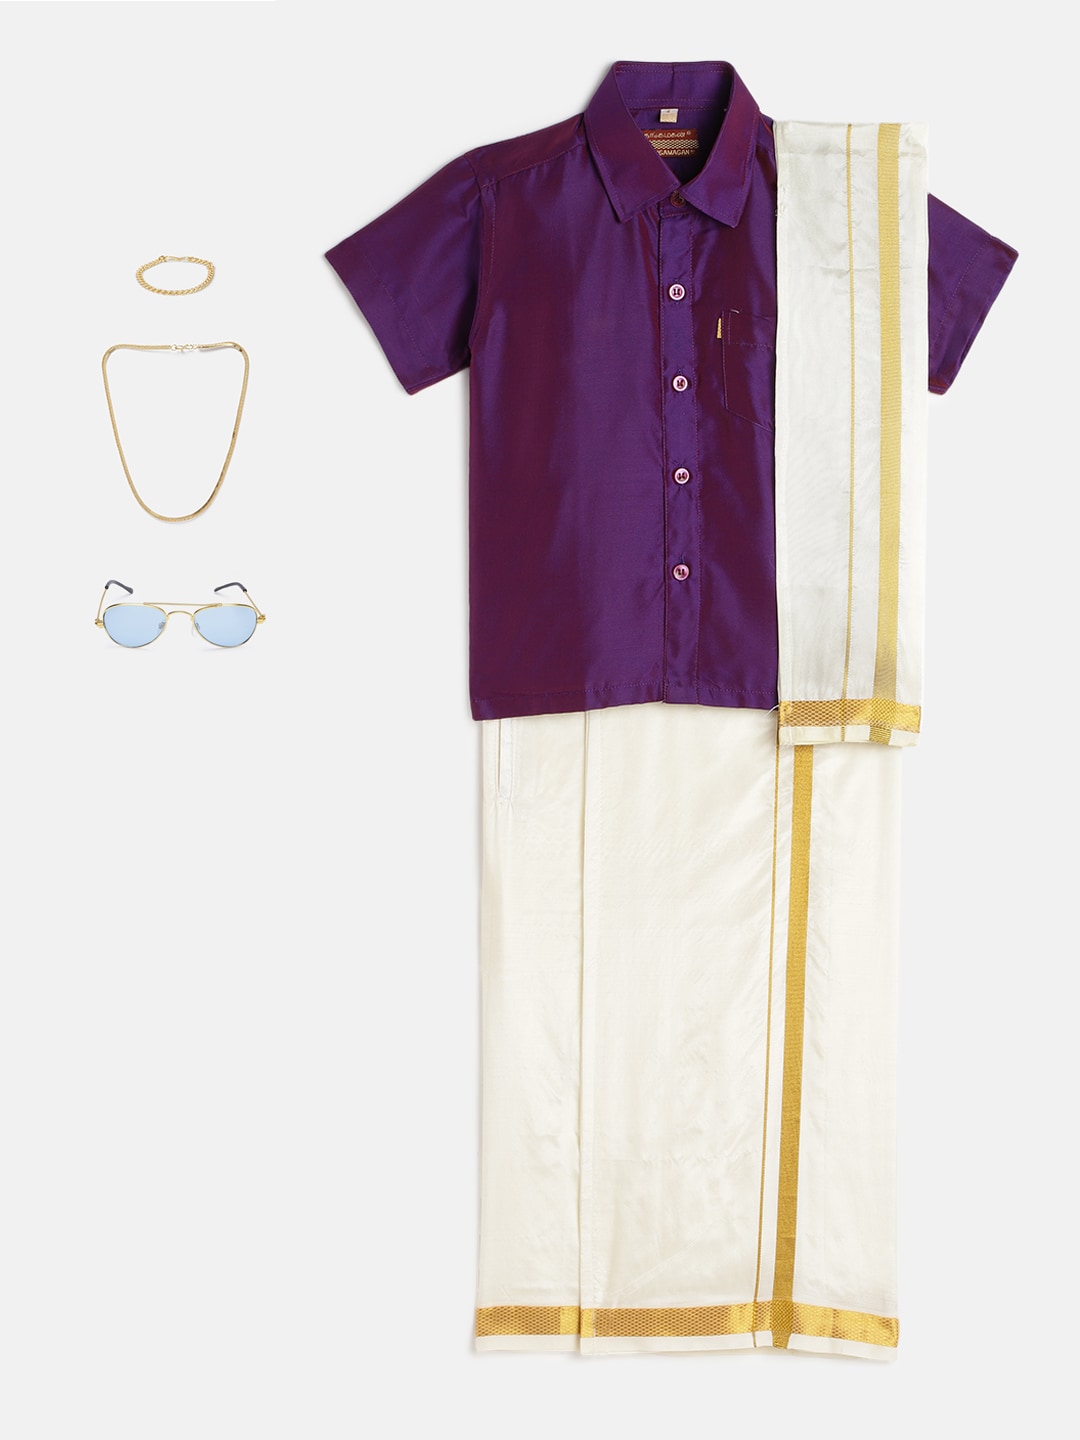 18-Yuvaan-Dark Orchid Shirt & Cream Dhoti With Hem Of Golden Zari Along with Freebies Set